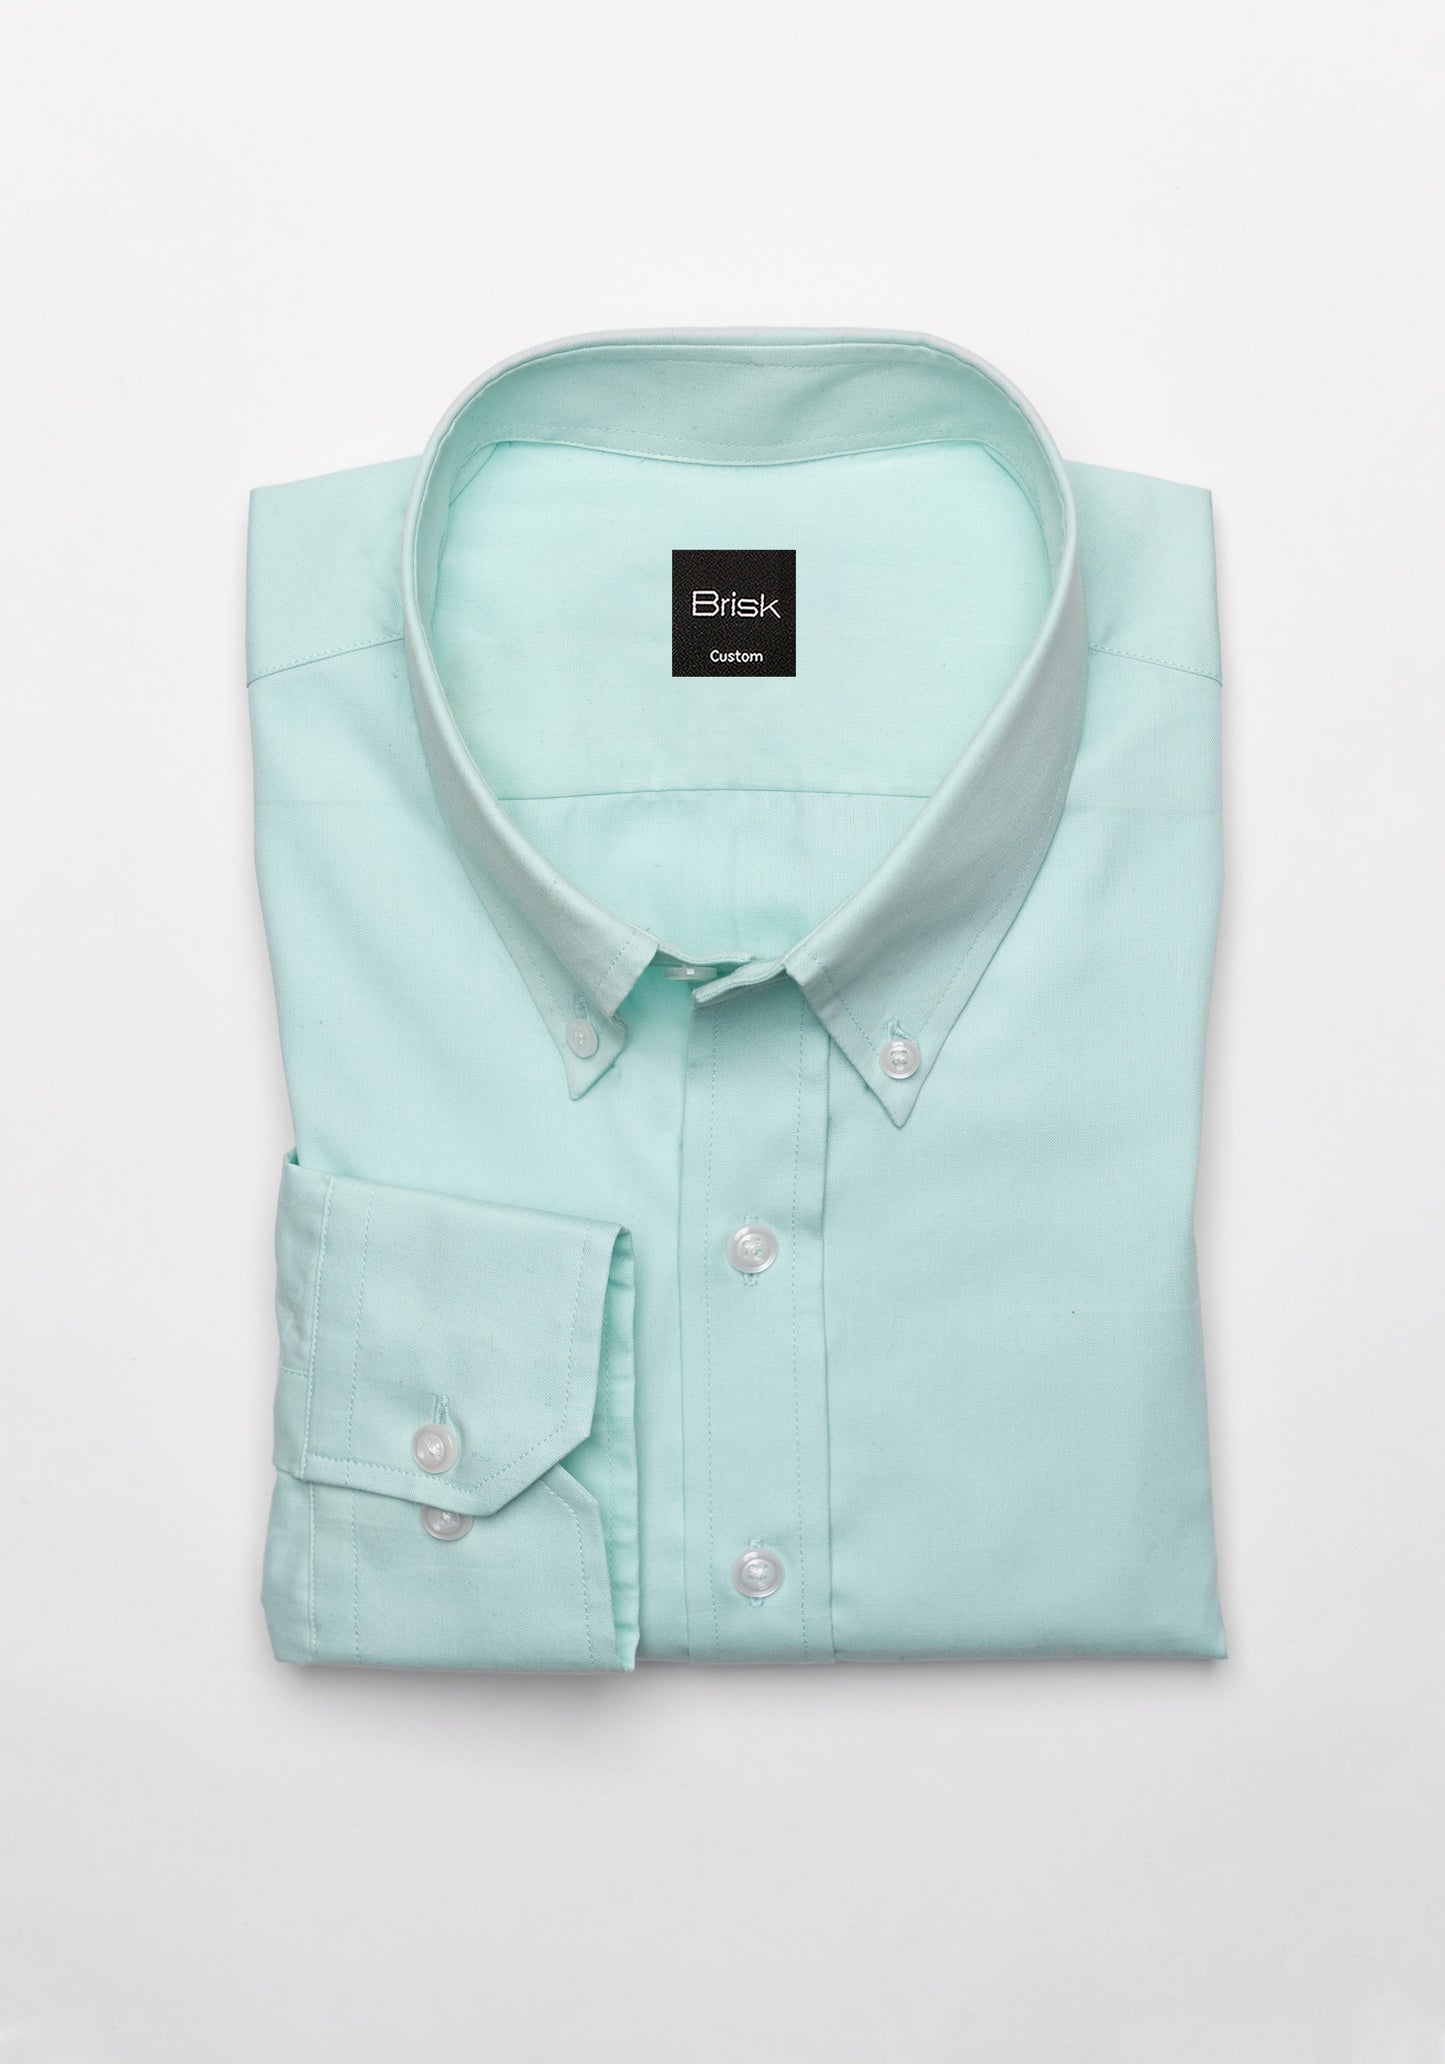 Pastel Seafoam Green Crisp Pinpoint Shirt - SALE